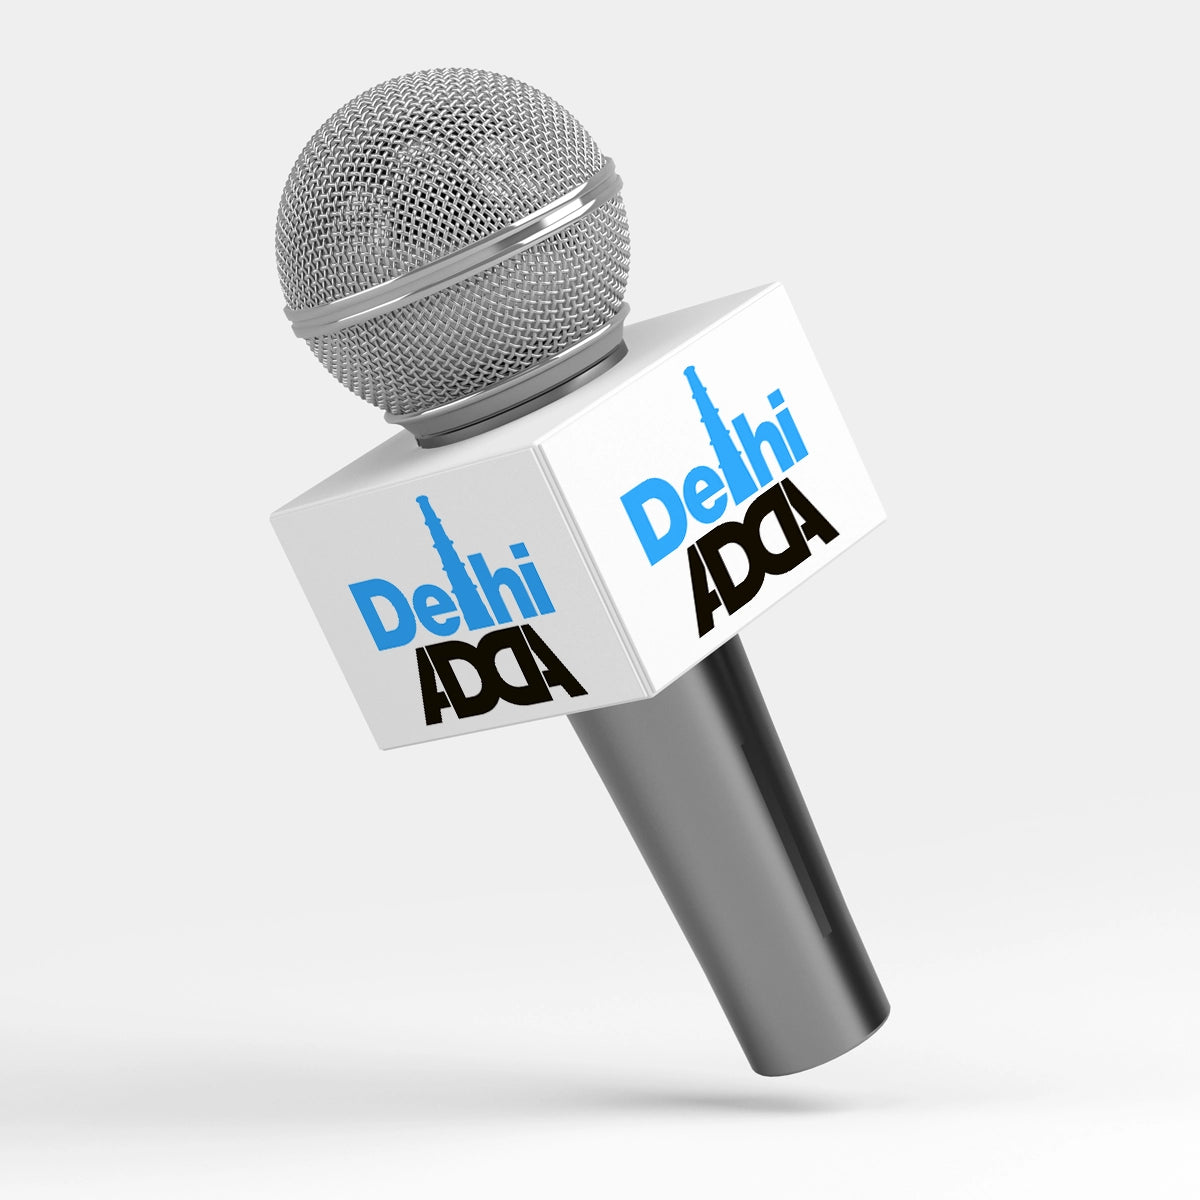 DelhiAdda.com